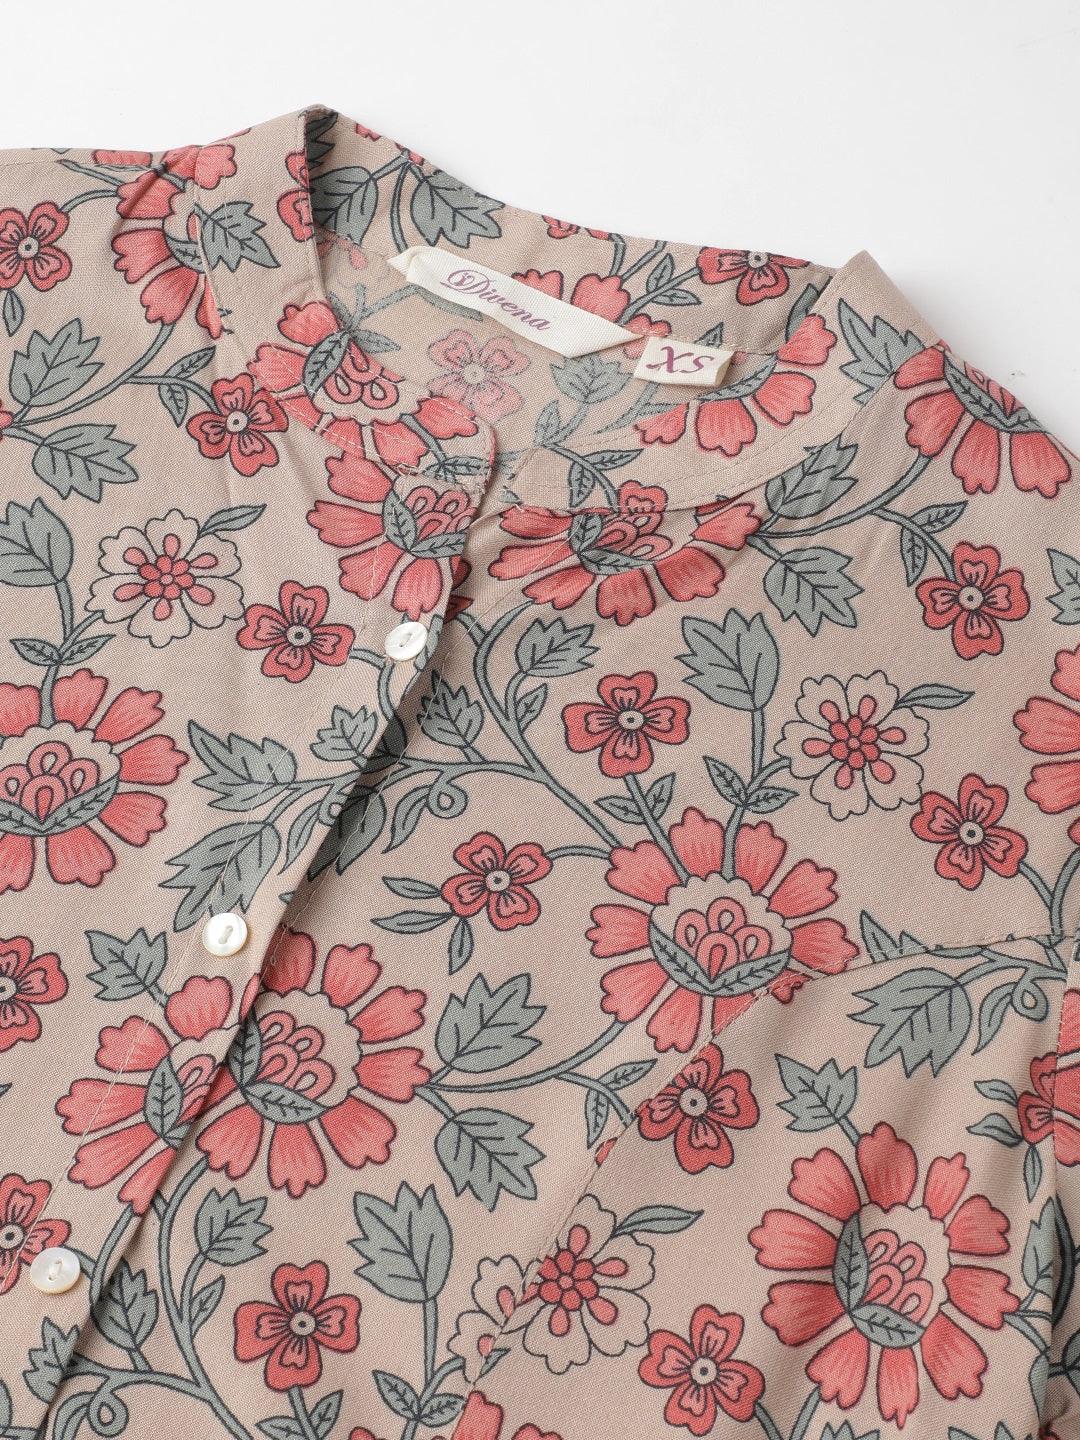 Divena Dark Beige Floral Printed Rayon A-line Shirt Style Top - divena world